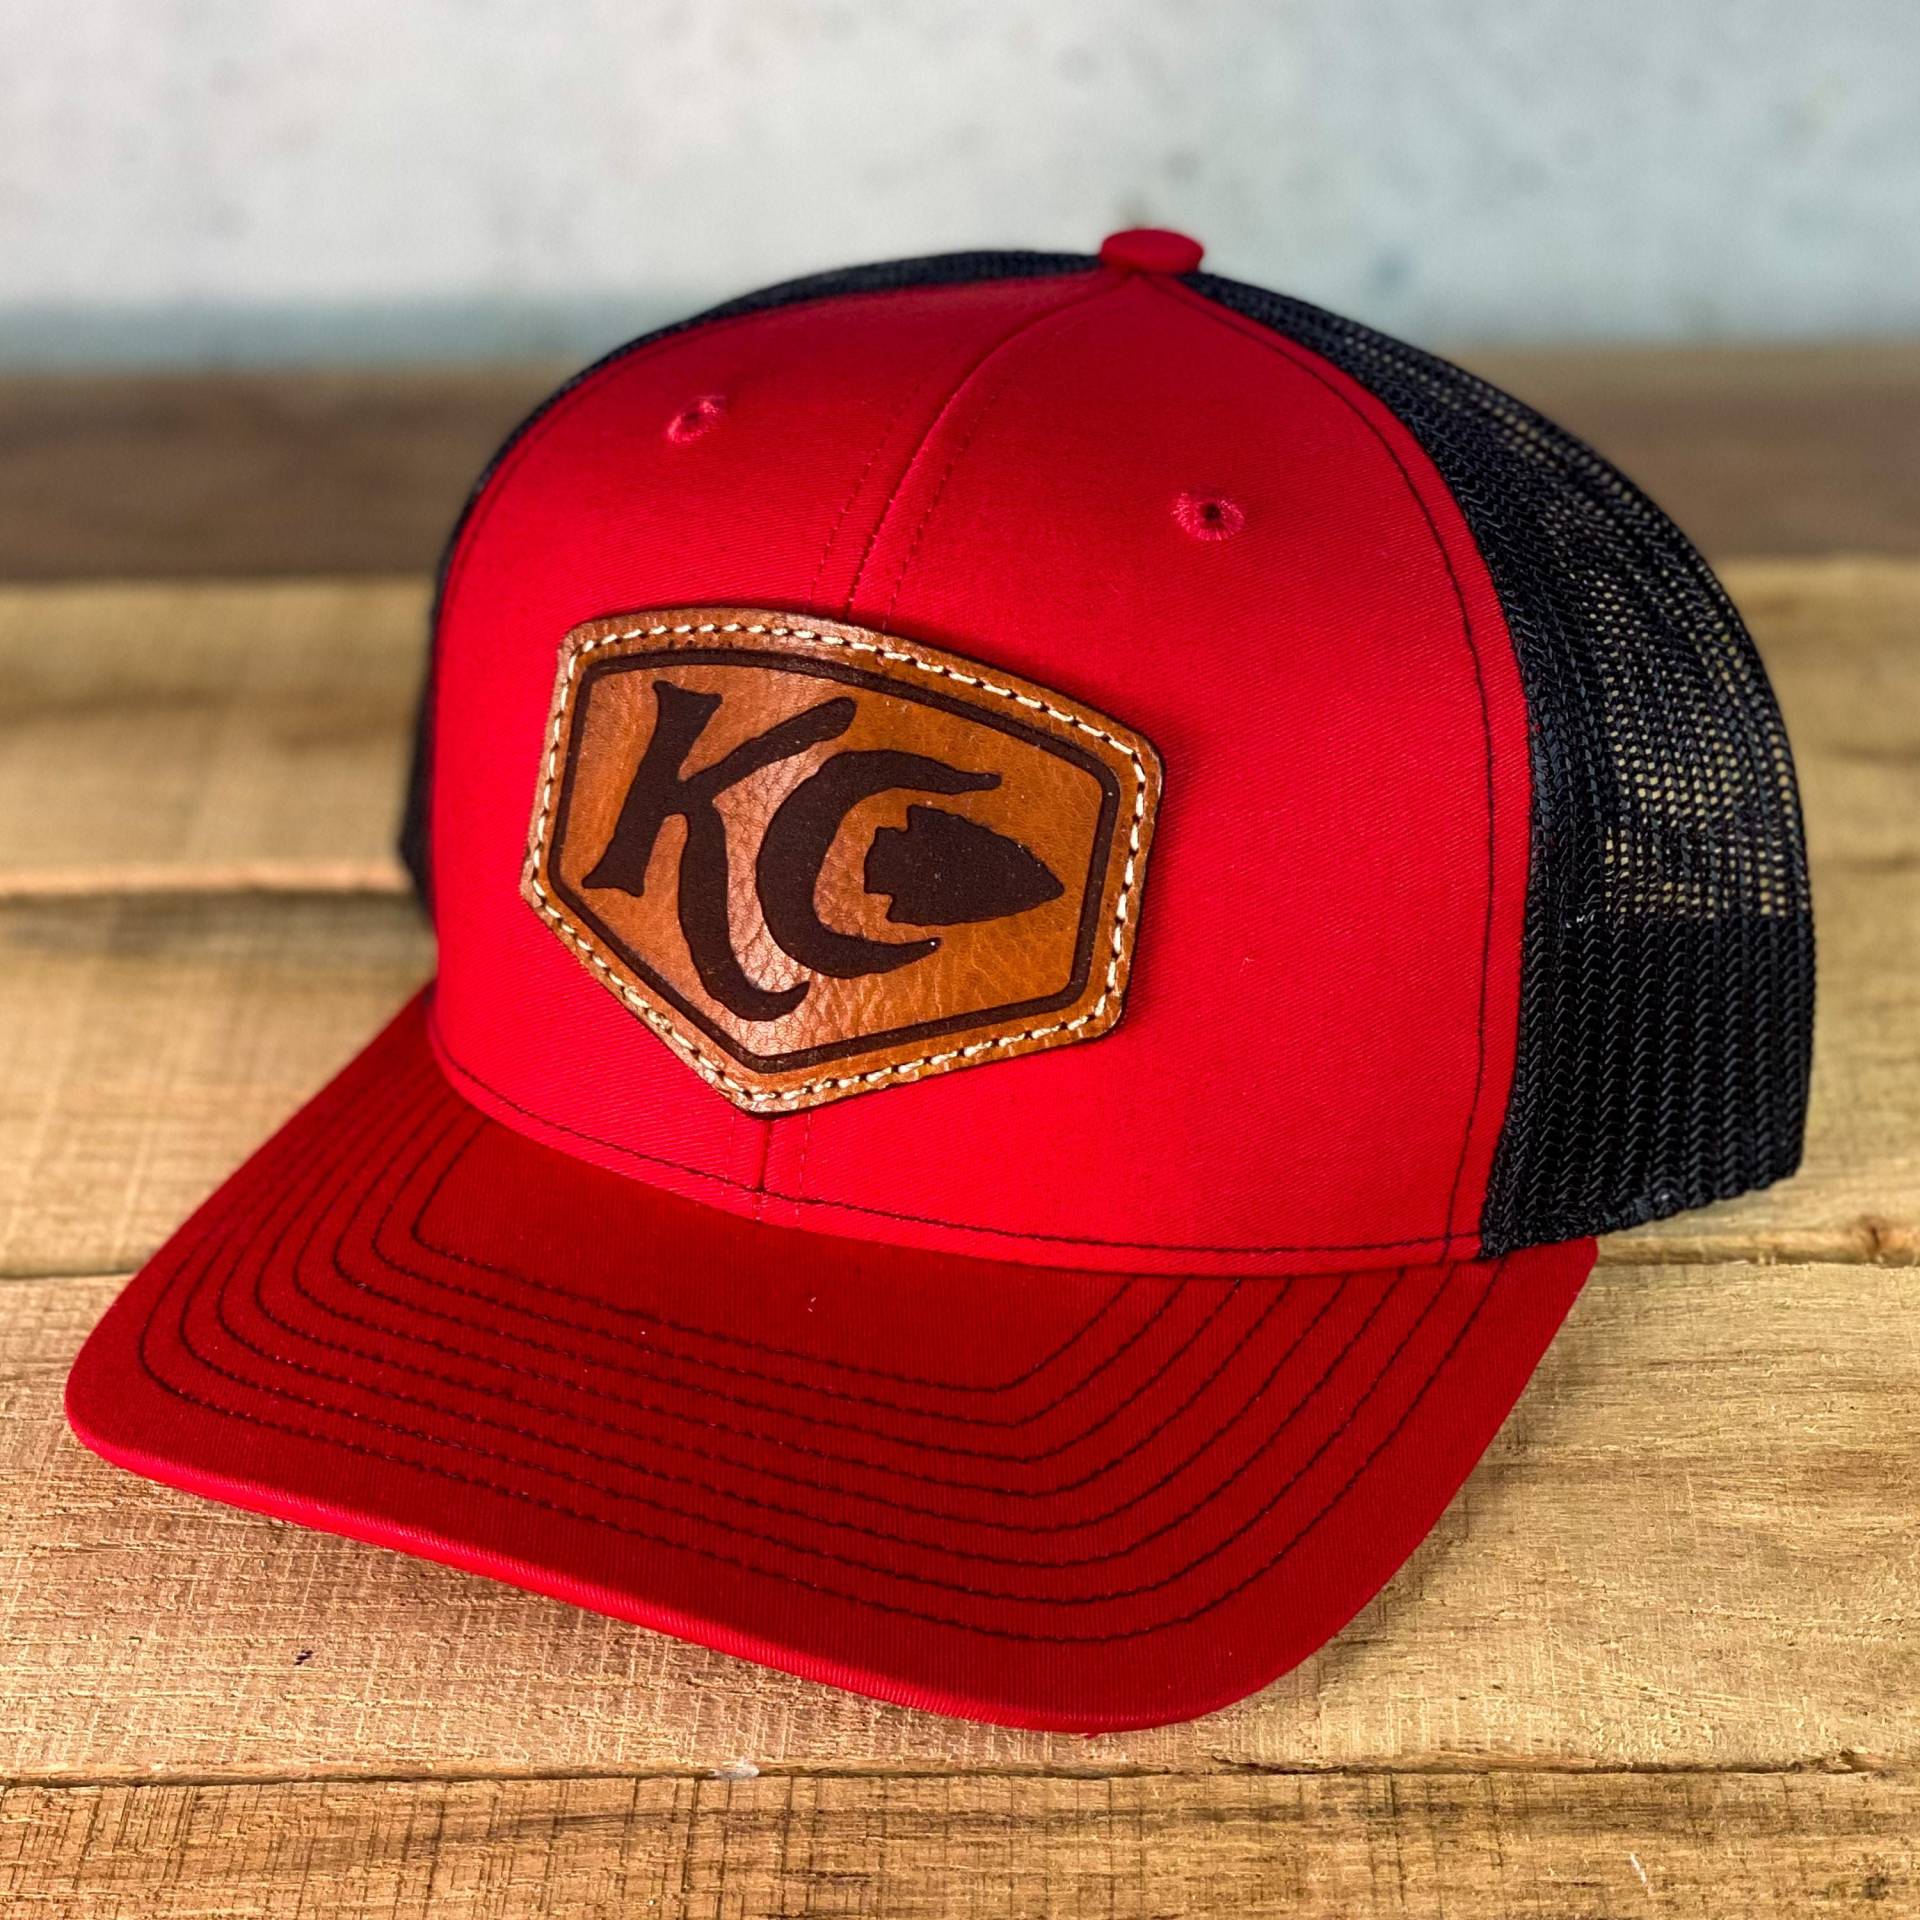 Kc Inset - Richardson 112 Leder Patch Hut von KCLaserCo